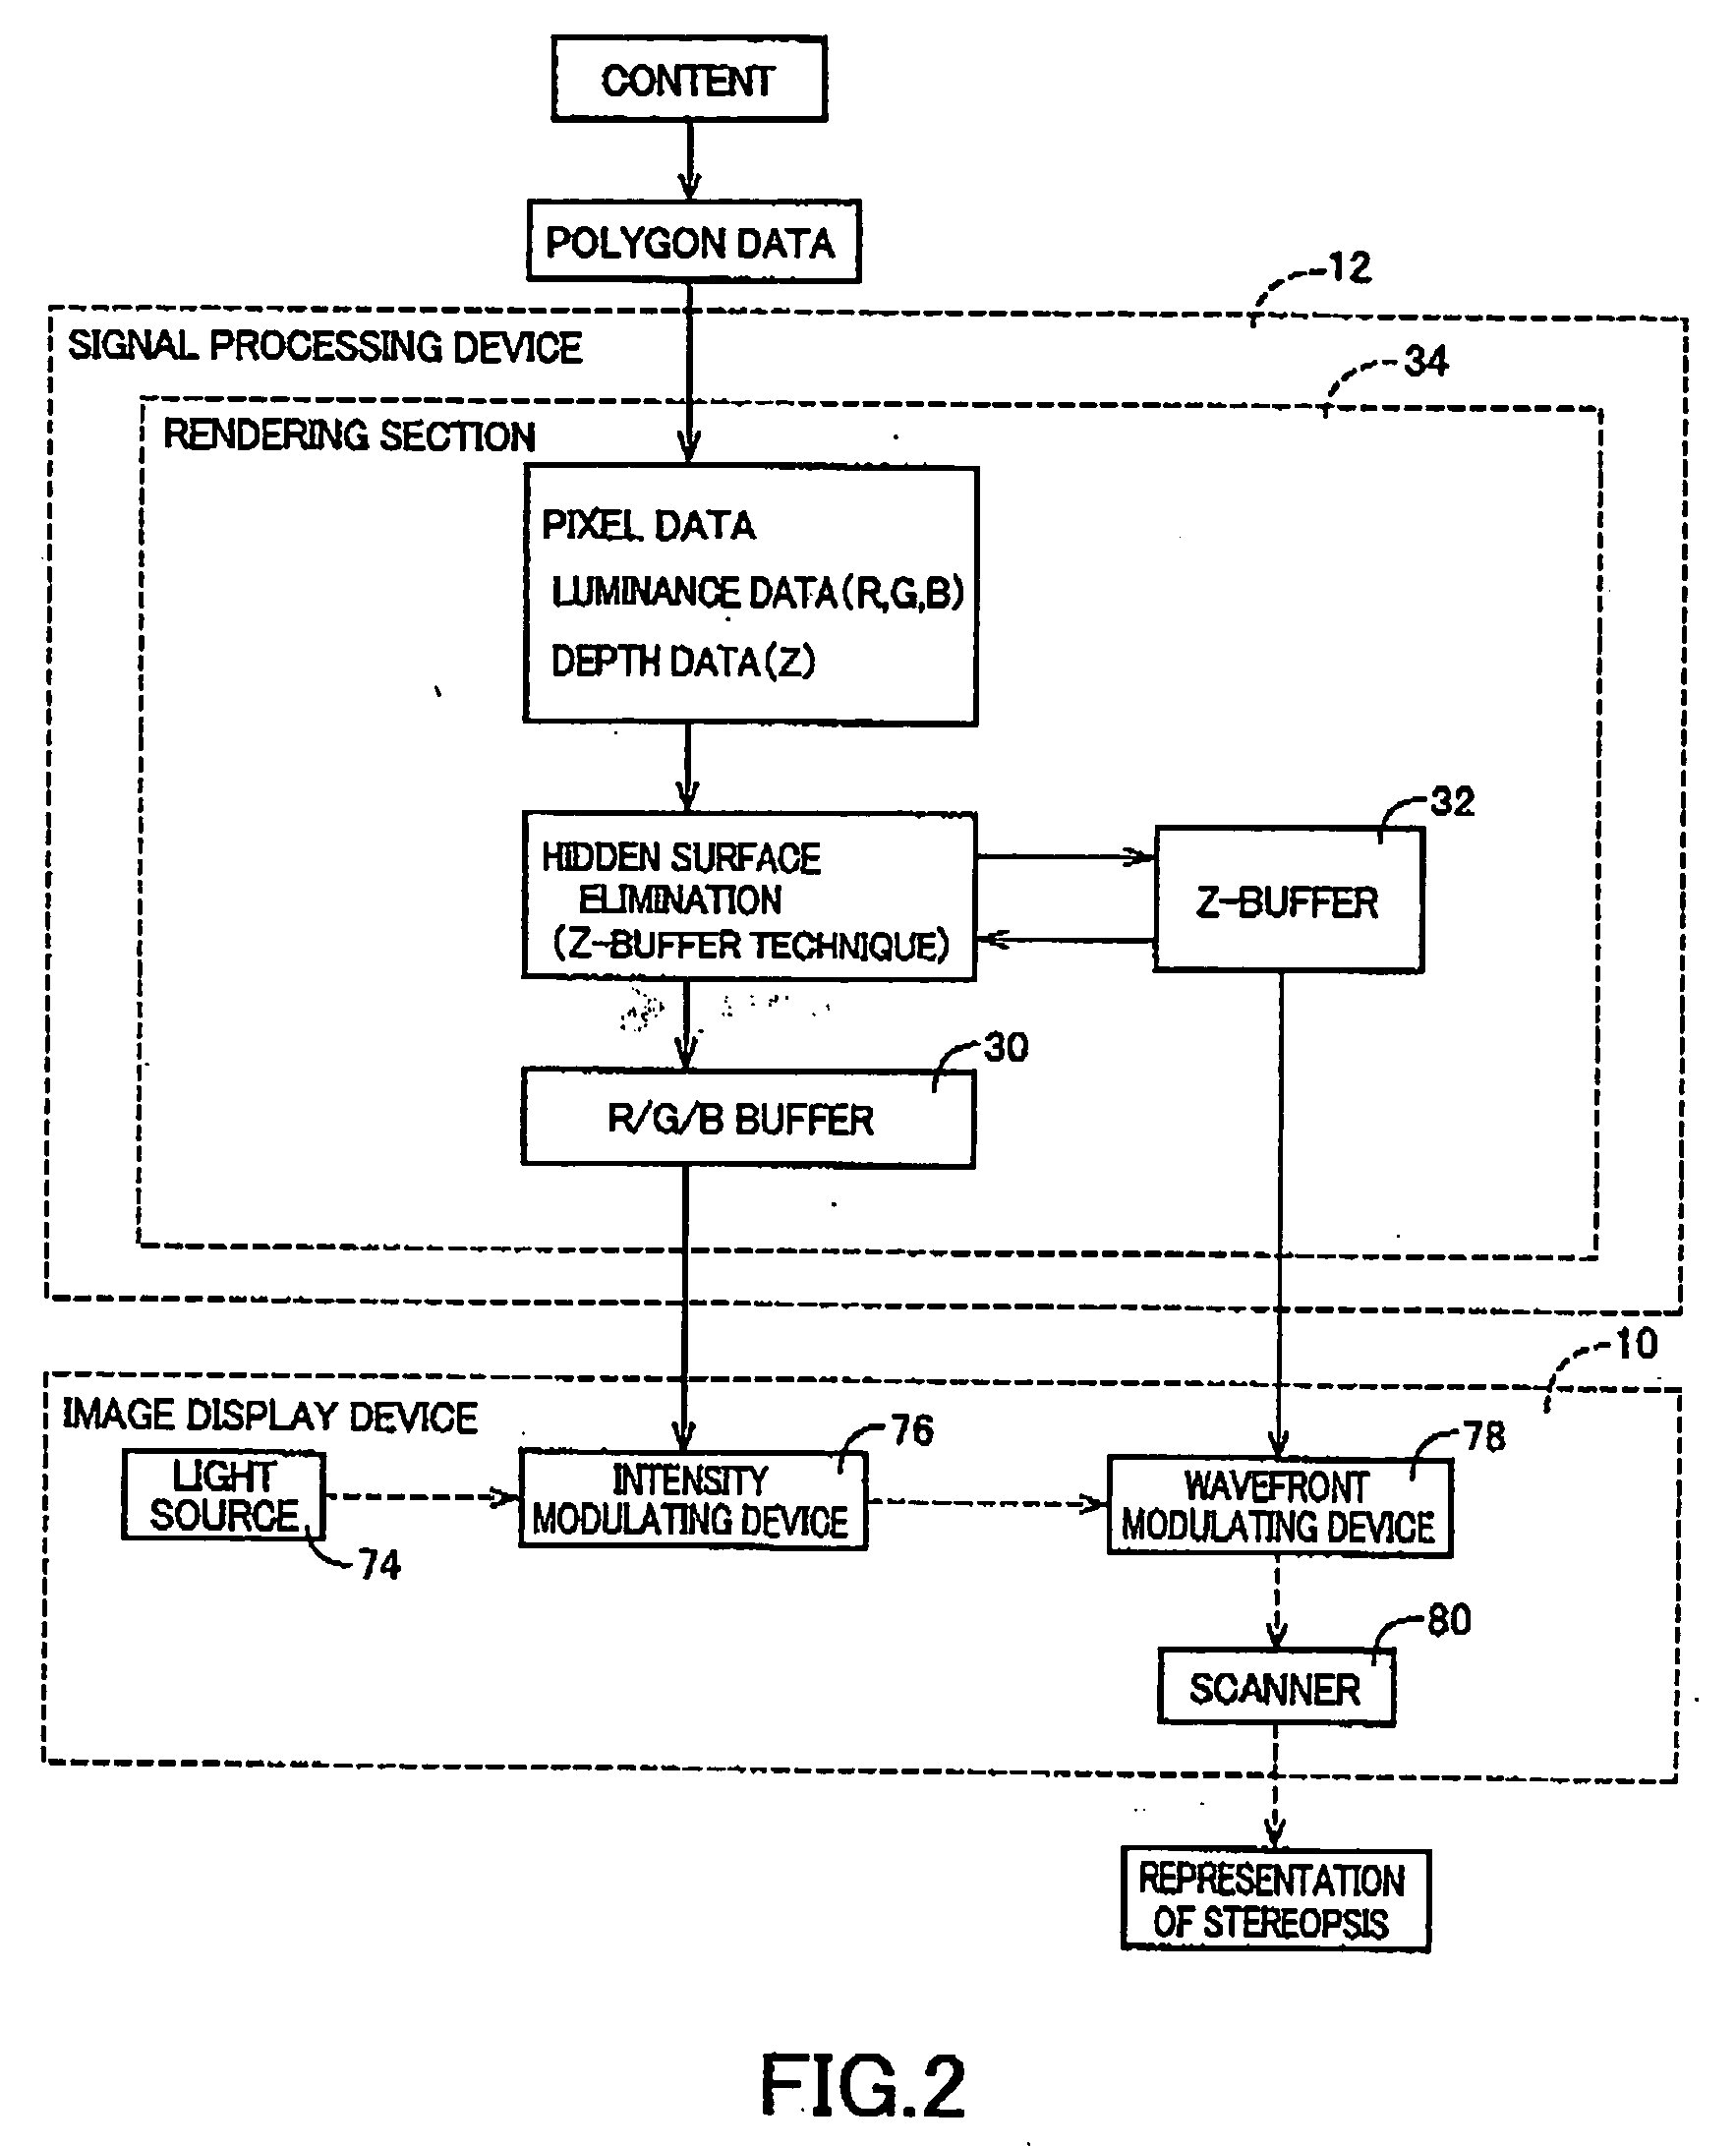 Image display apparatus and signal processing apparatus